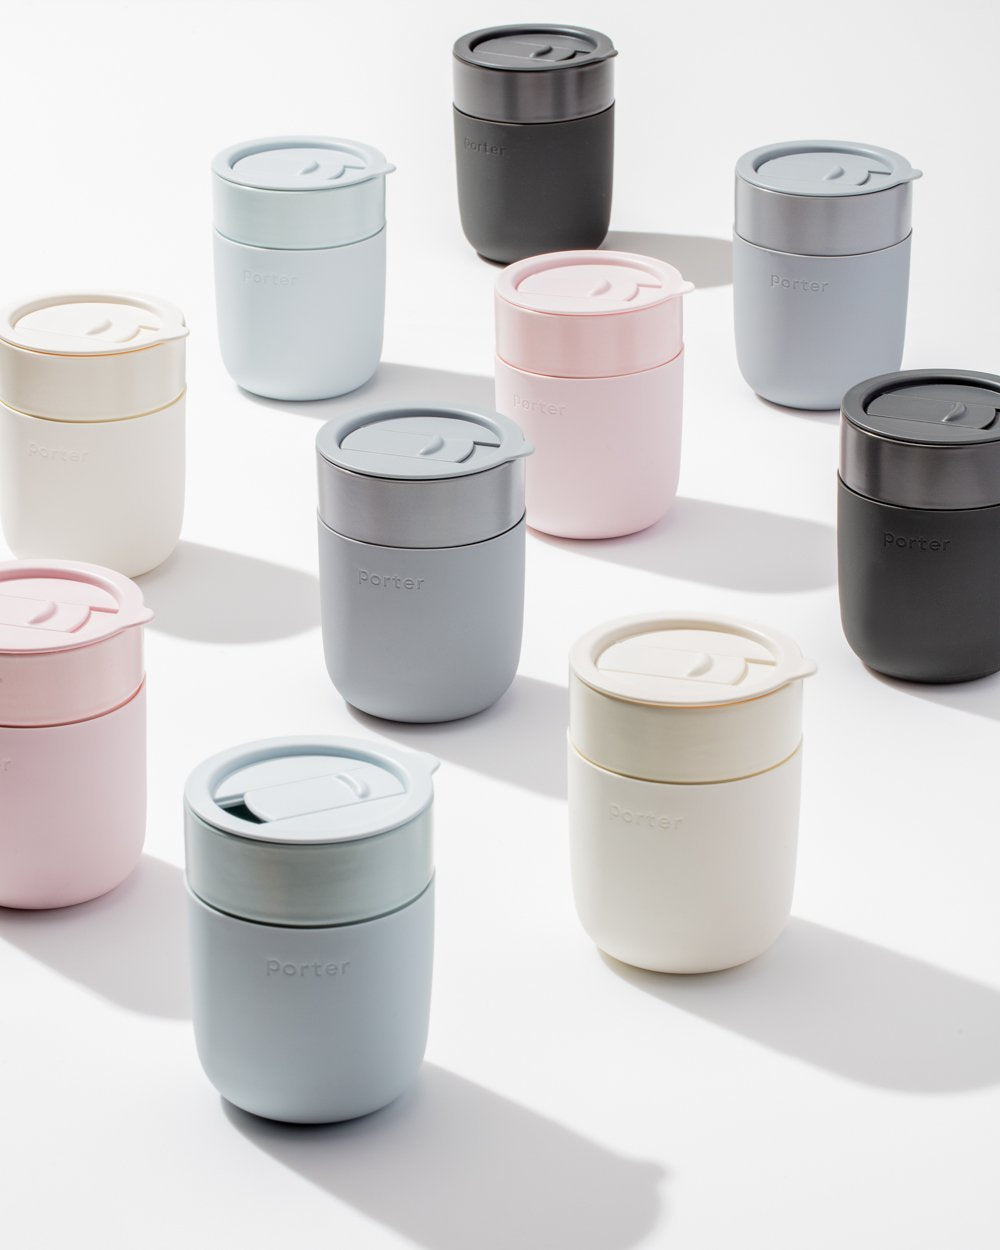 Porter Ceramic Mug: Charcoal